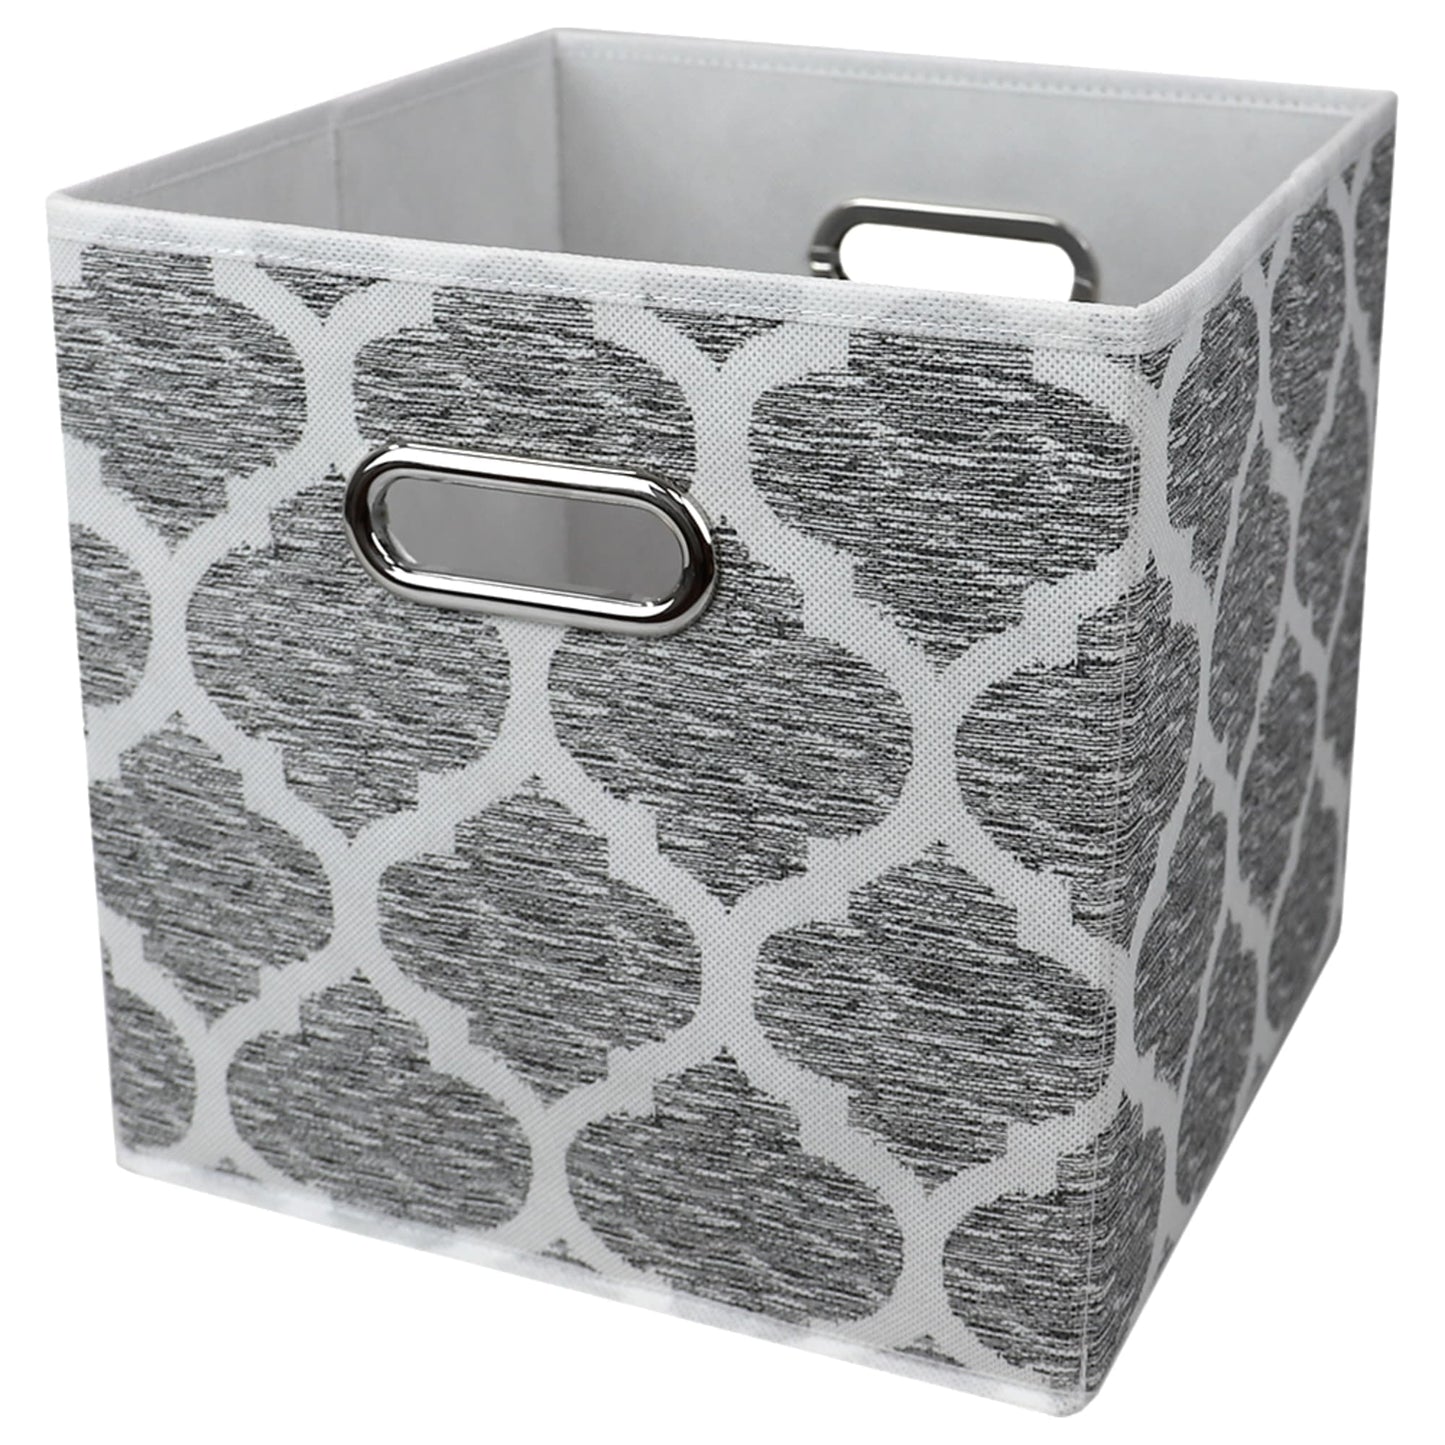 Arabesque Non-woven Collapsible Storage Cube, Grey